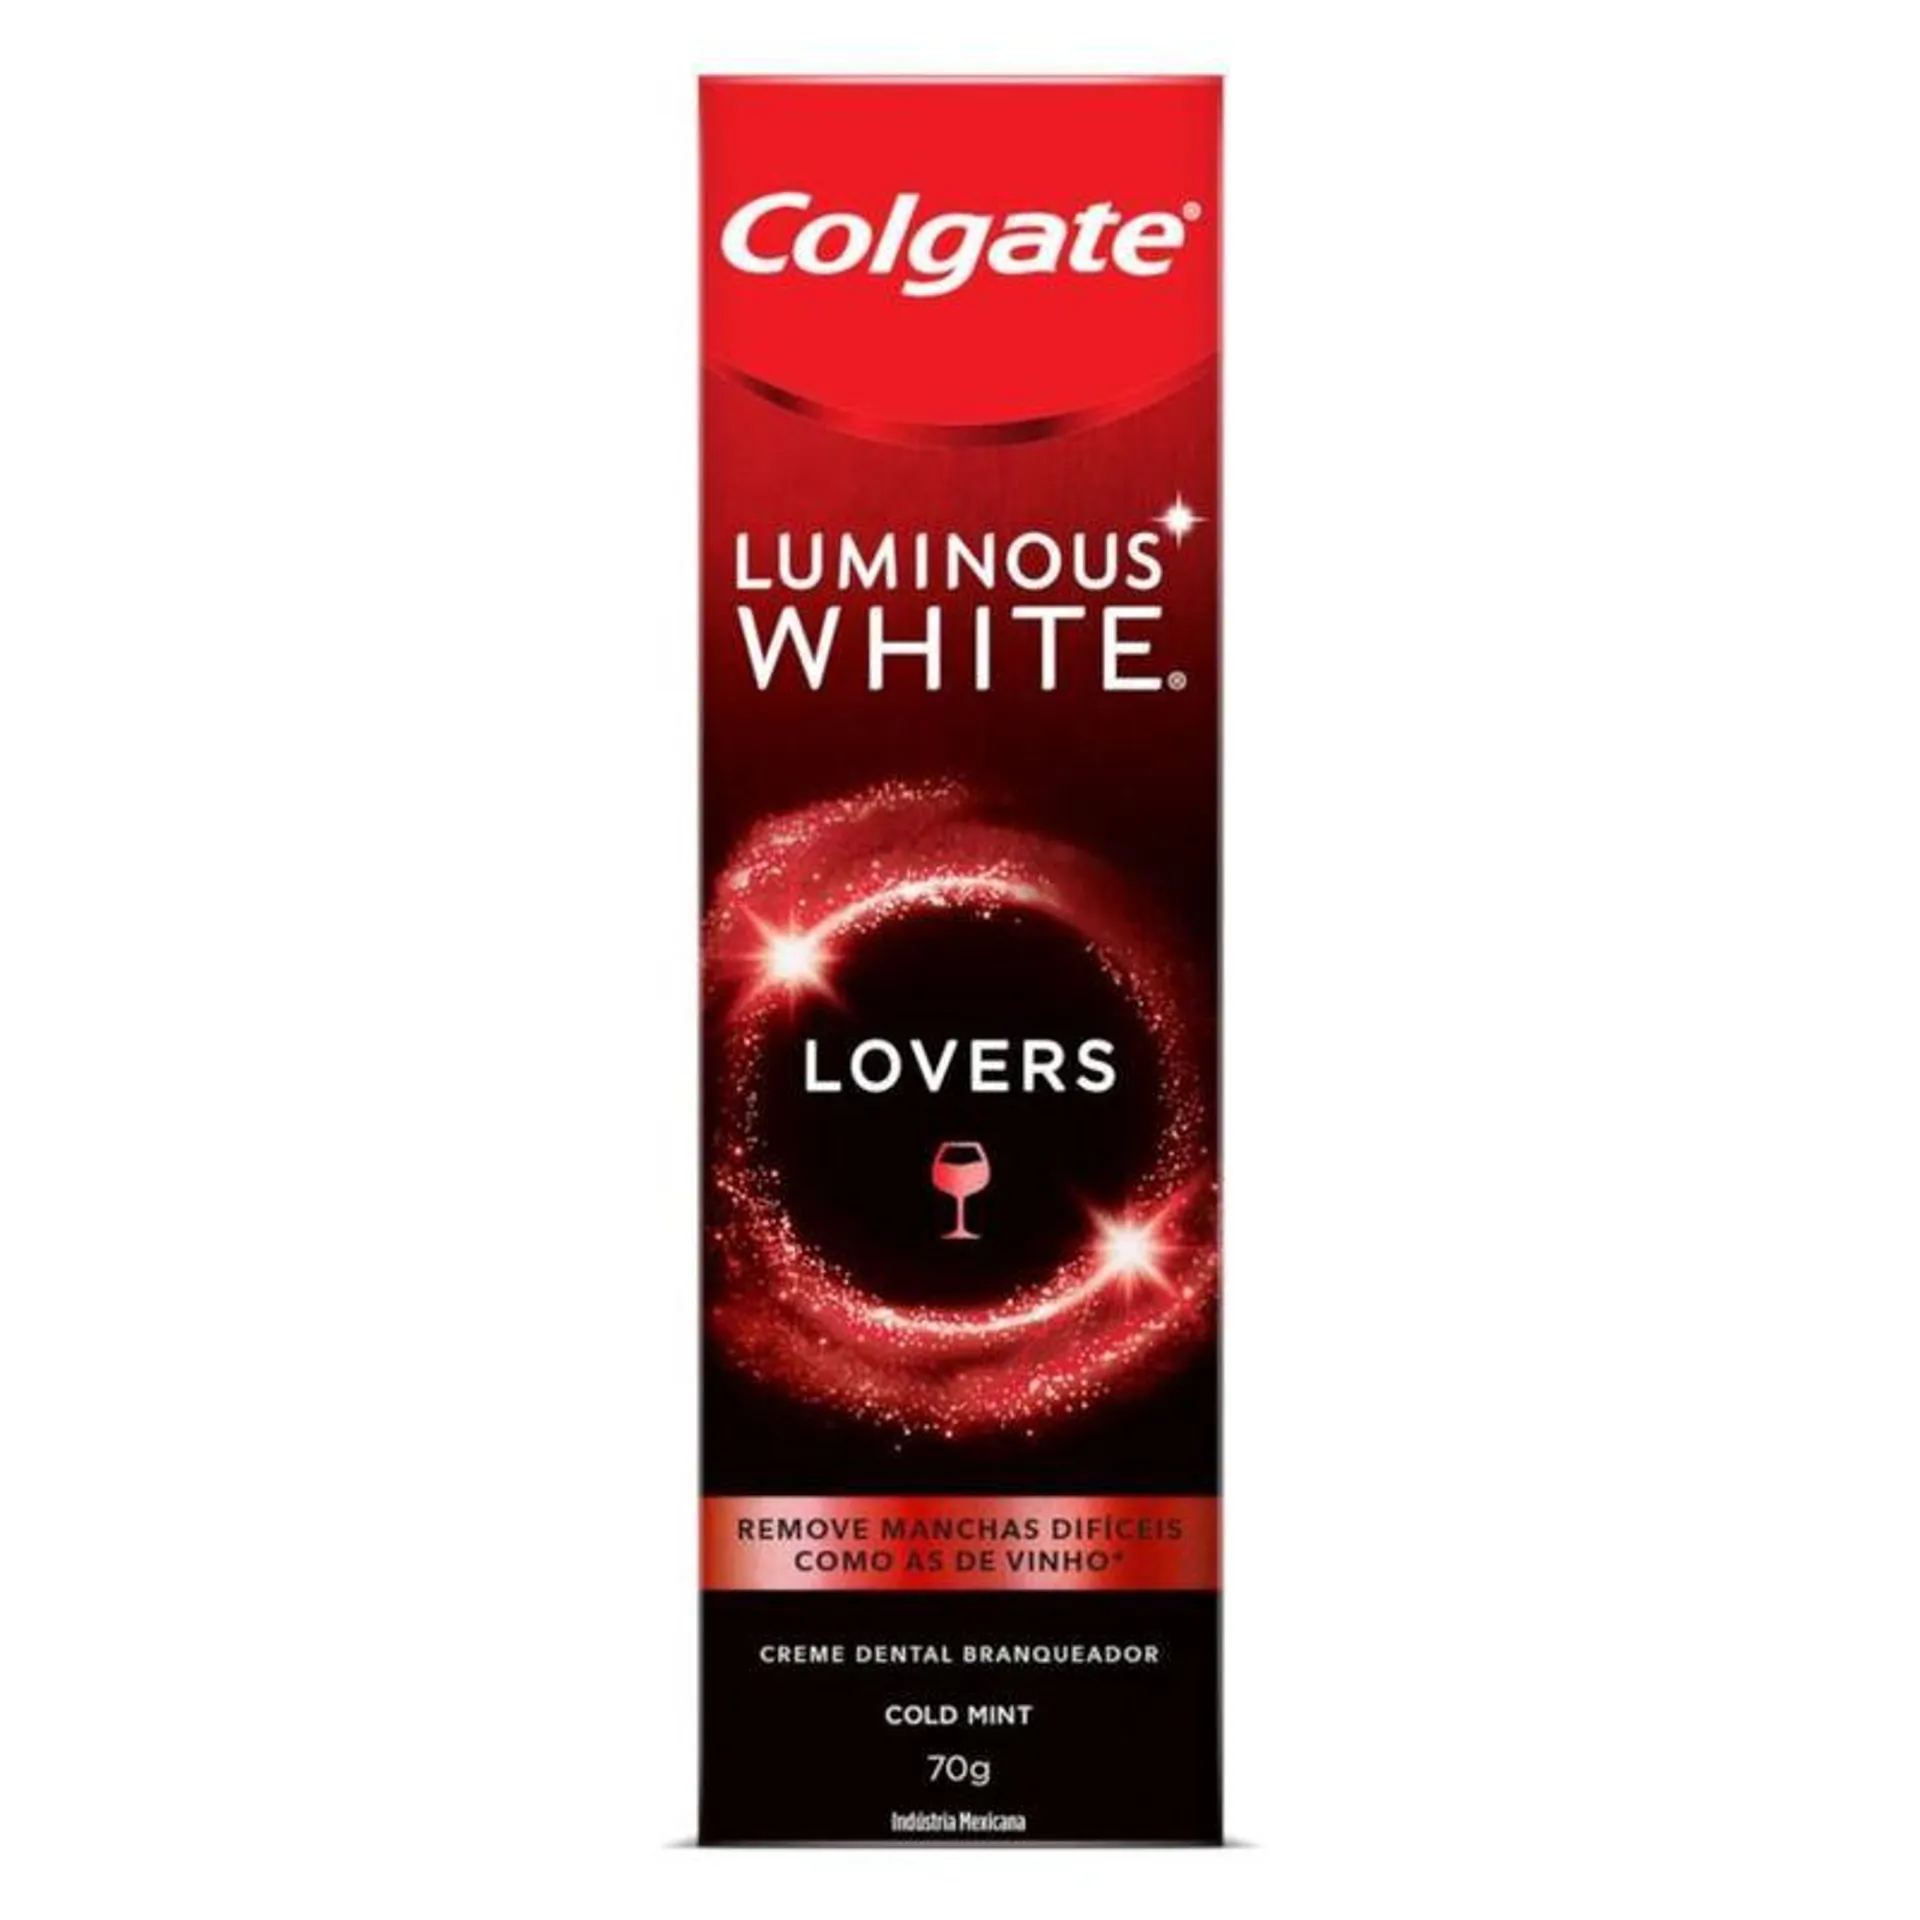 Creme Dental Colgate Luminous White Lovers Cold Mint 70g